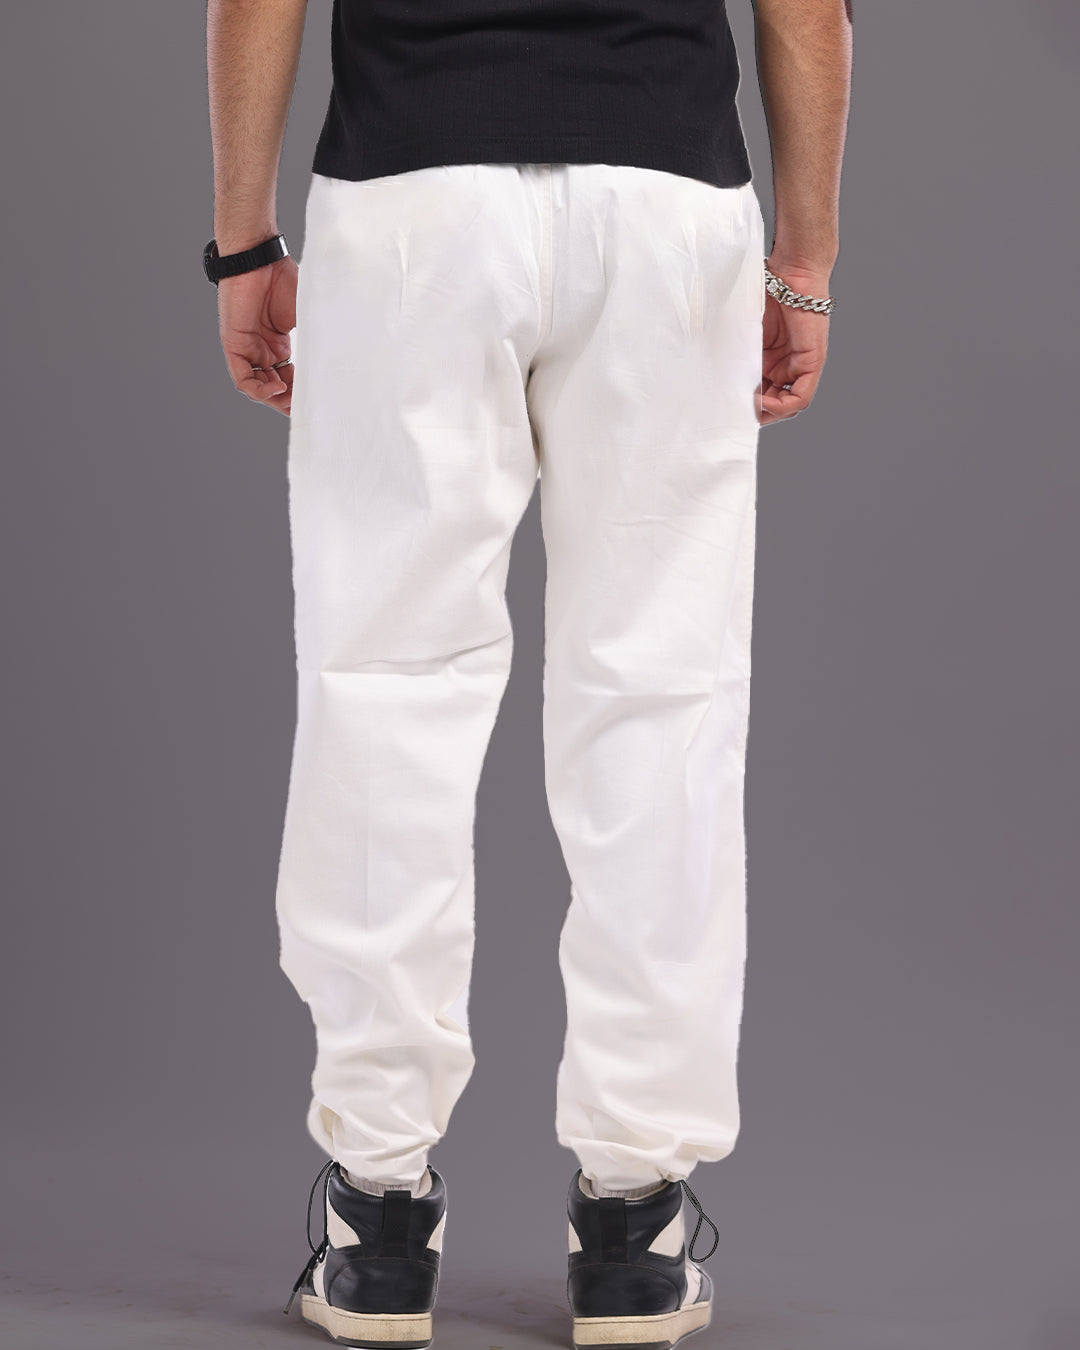 Mens White Adjustable Cargo Pants - Fire